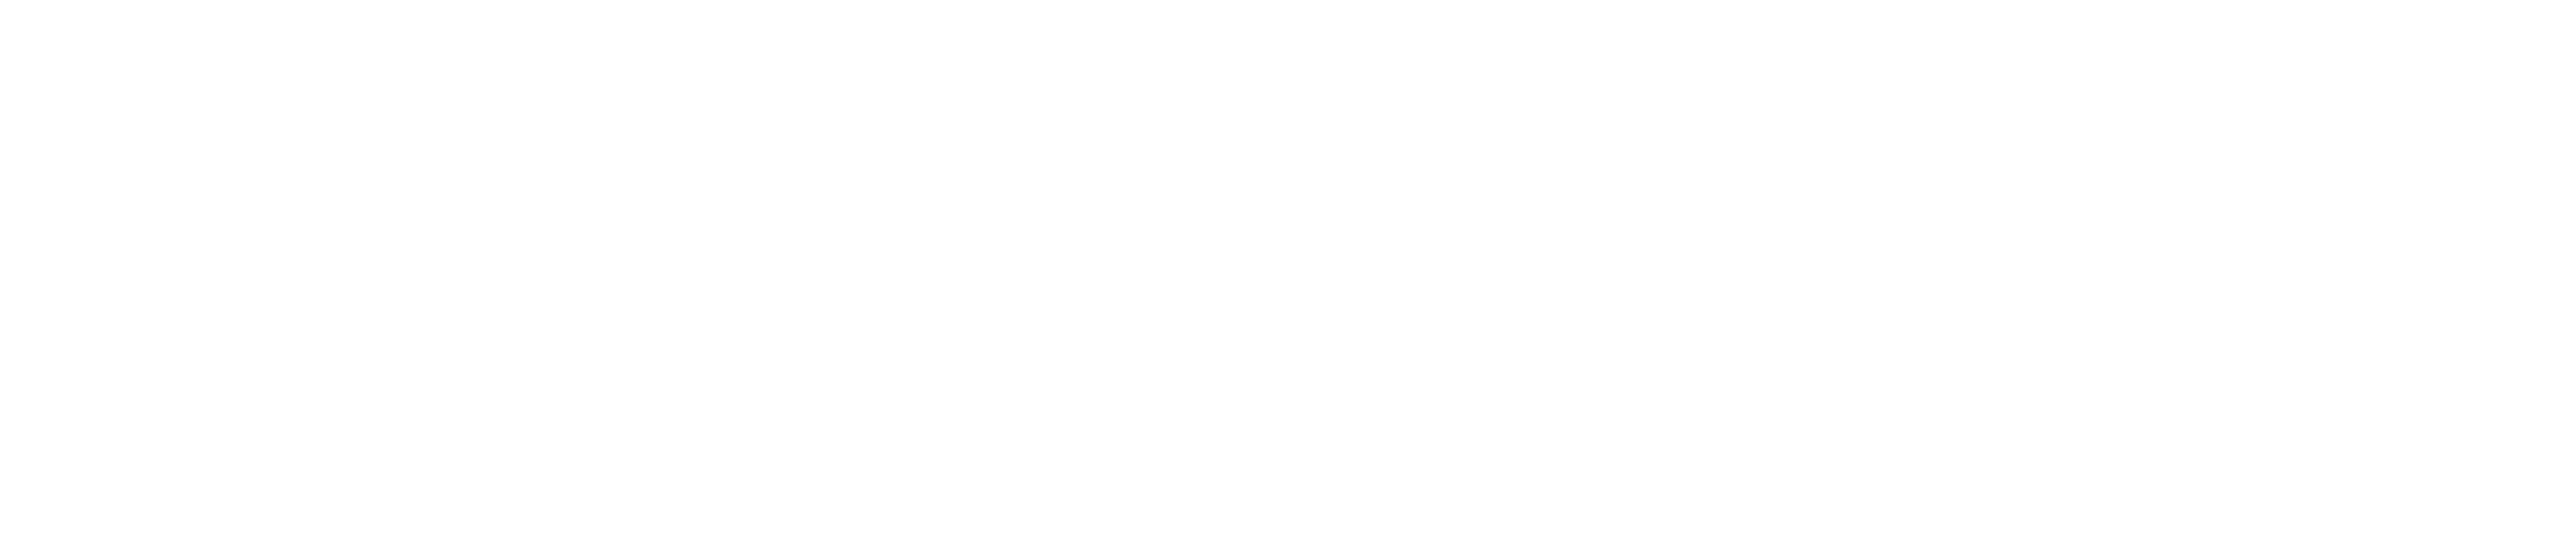 CEH creative logo